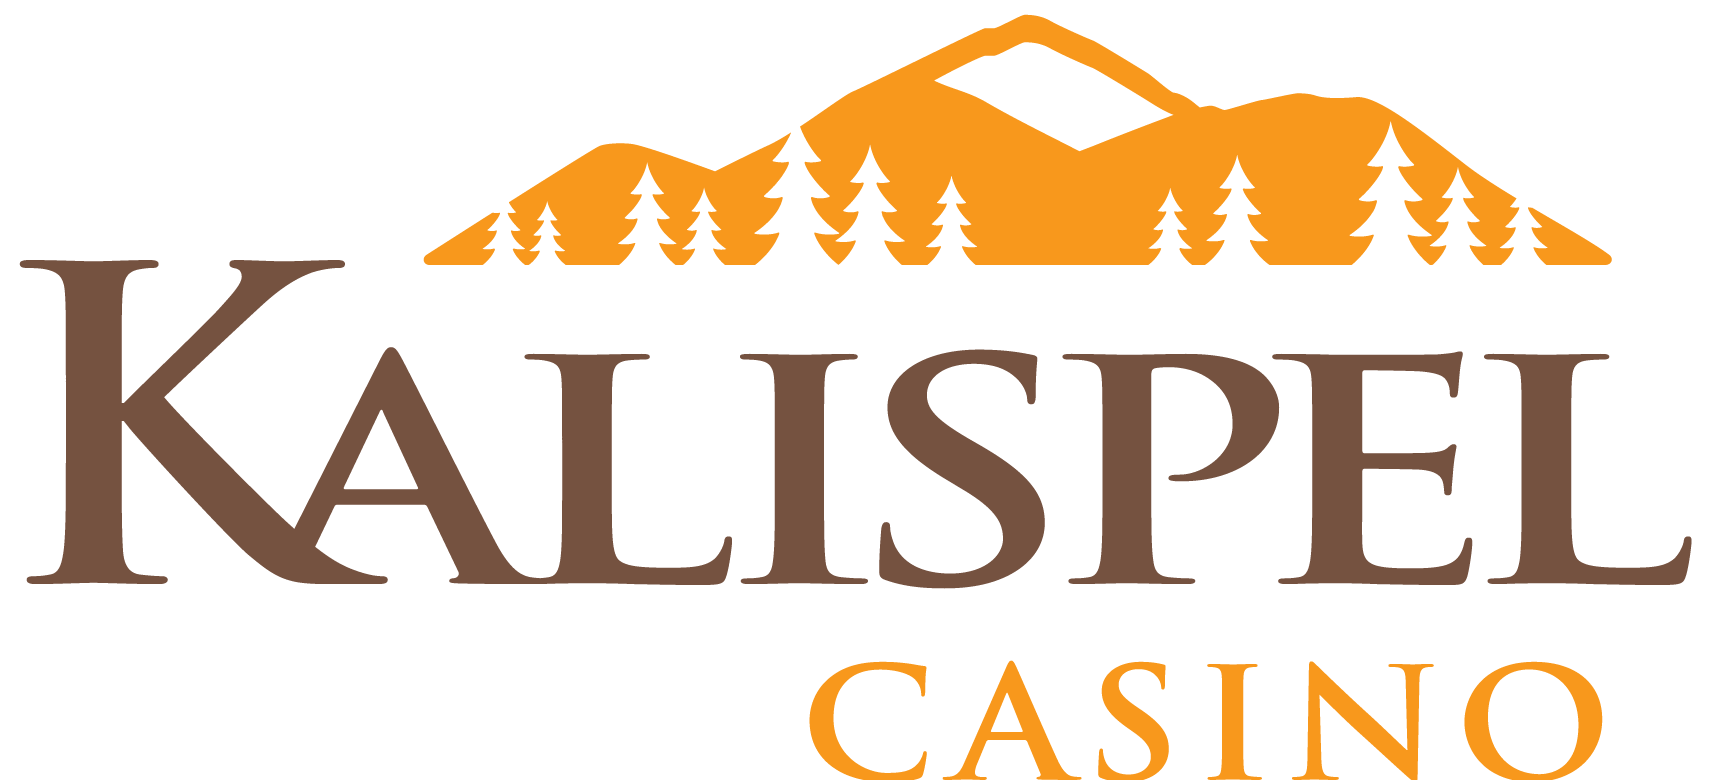 Kalispel_logo_casino_CMYK name bigger